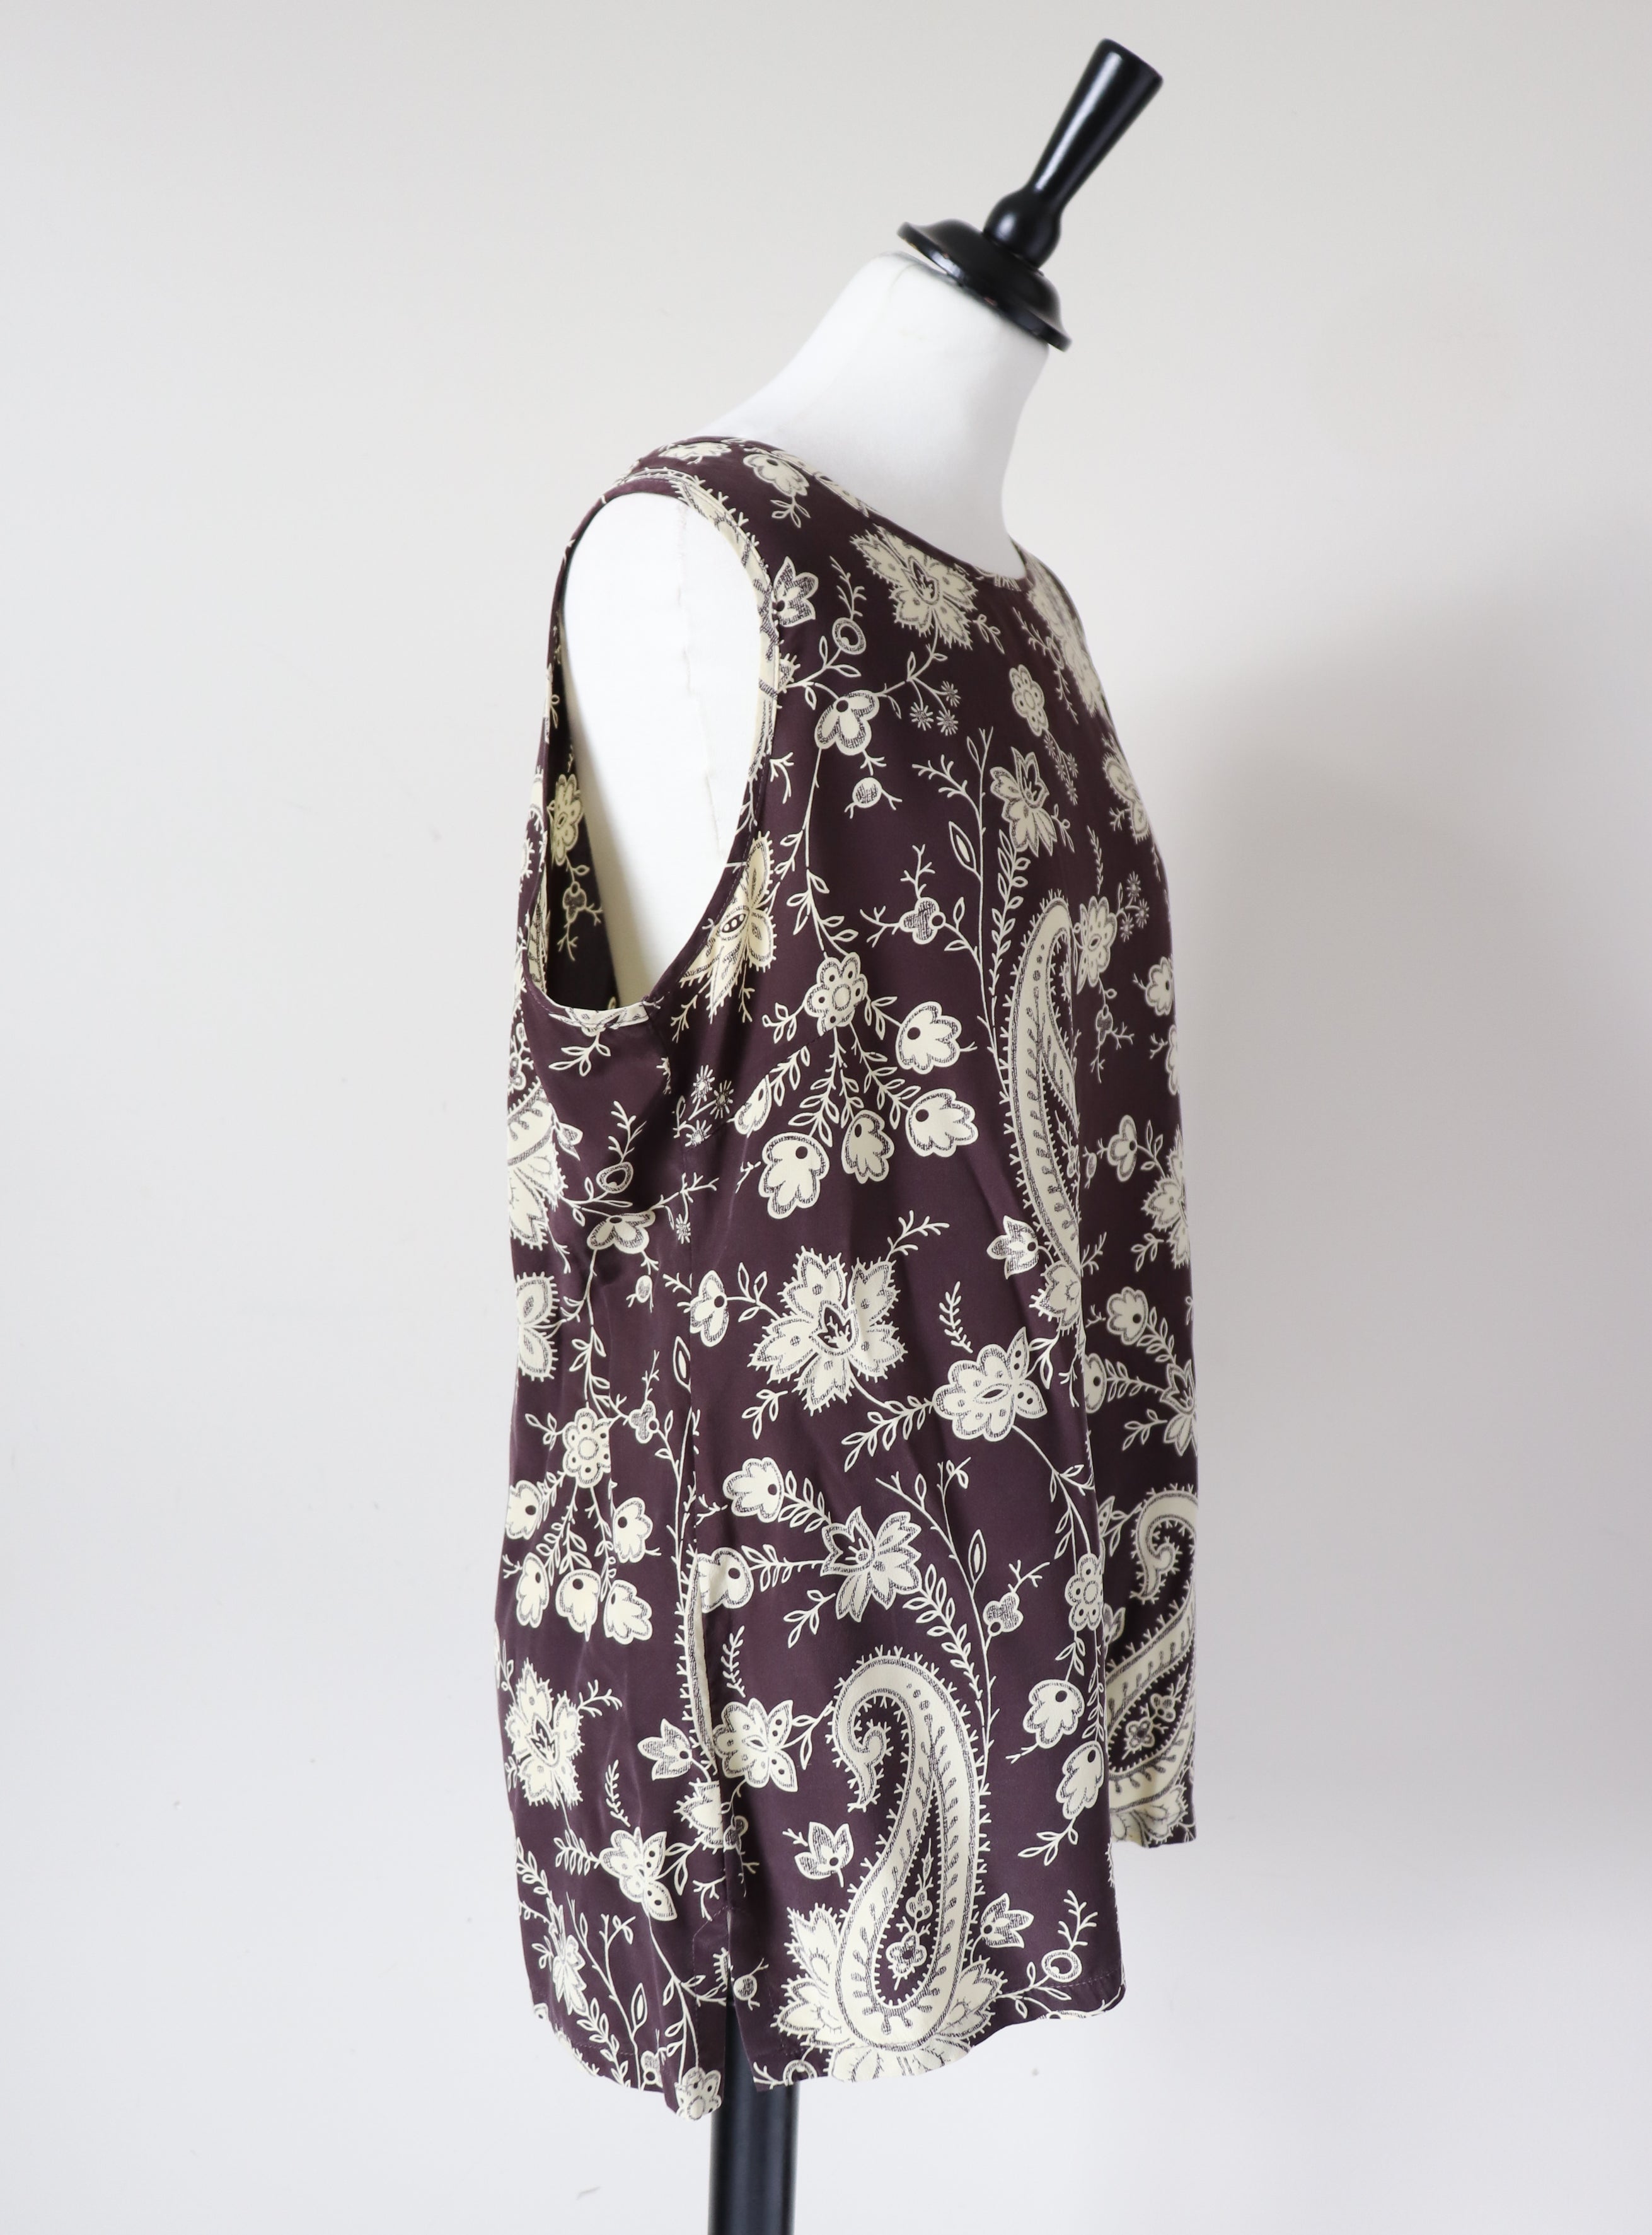 Jaeger Silk Sleeveless Top / Skirt Suit  - Paisley - Vintage 1990s - L /  UK 14